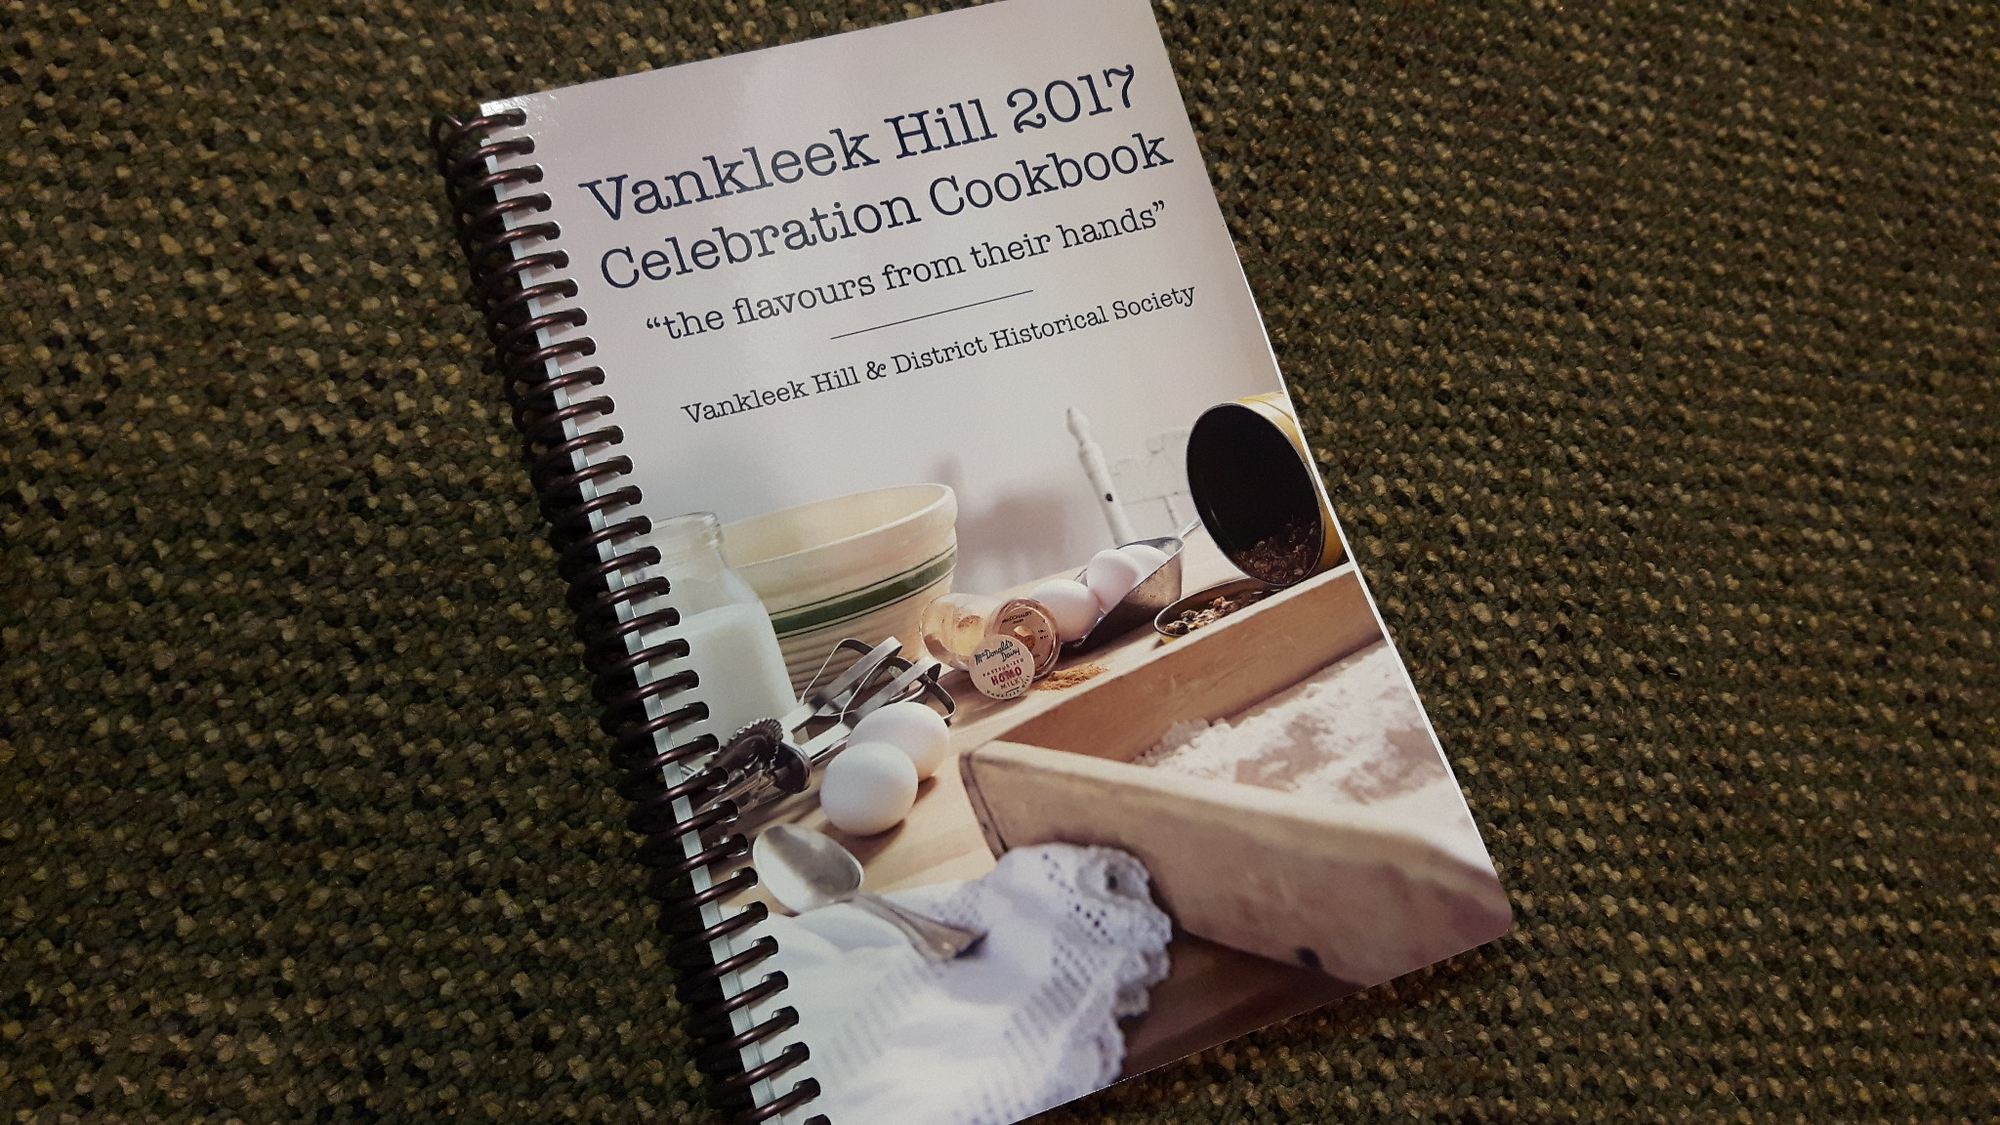 It’s here! Vankleek Hill 2017 Celebration Cookbook